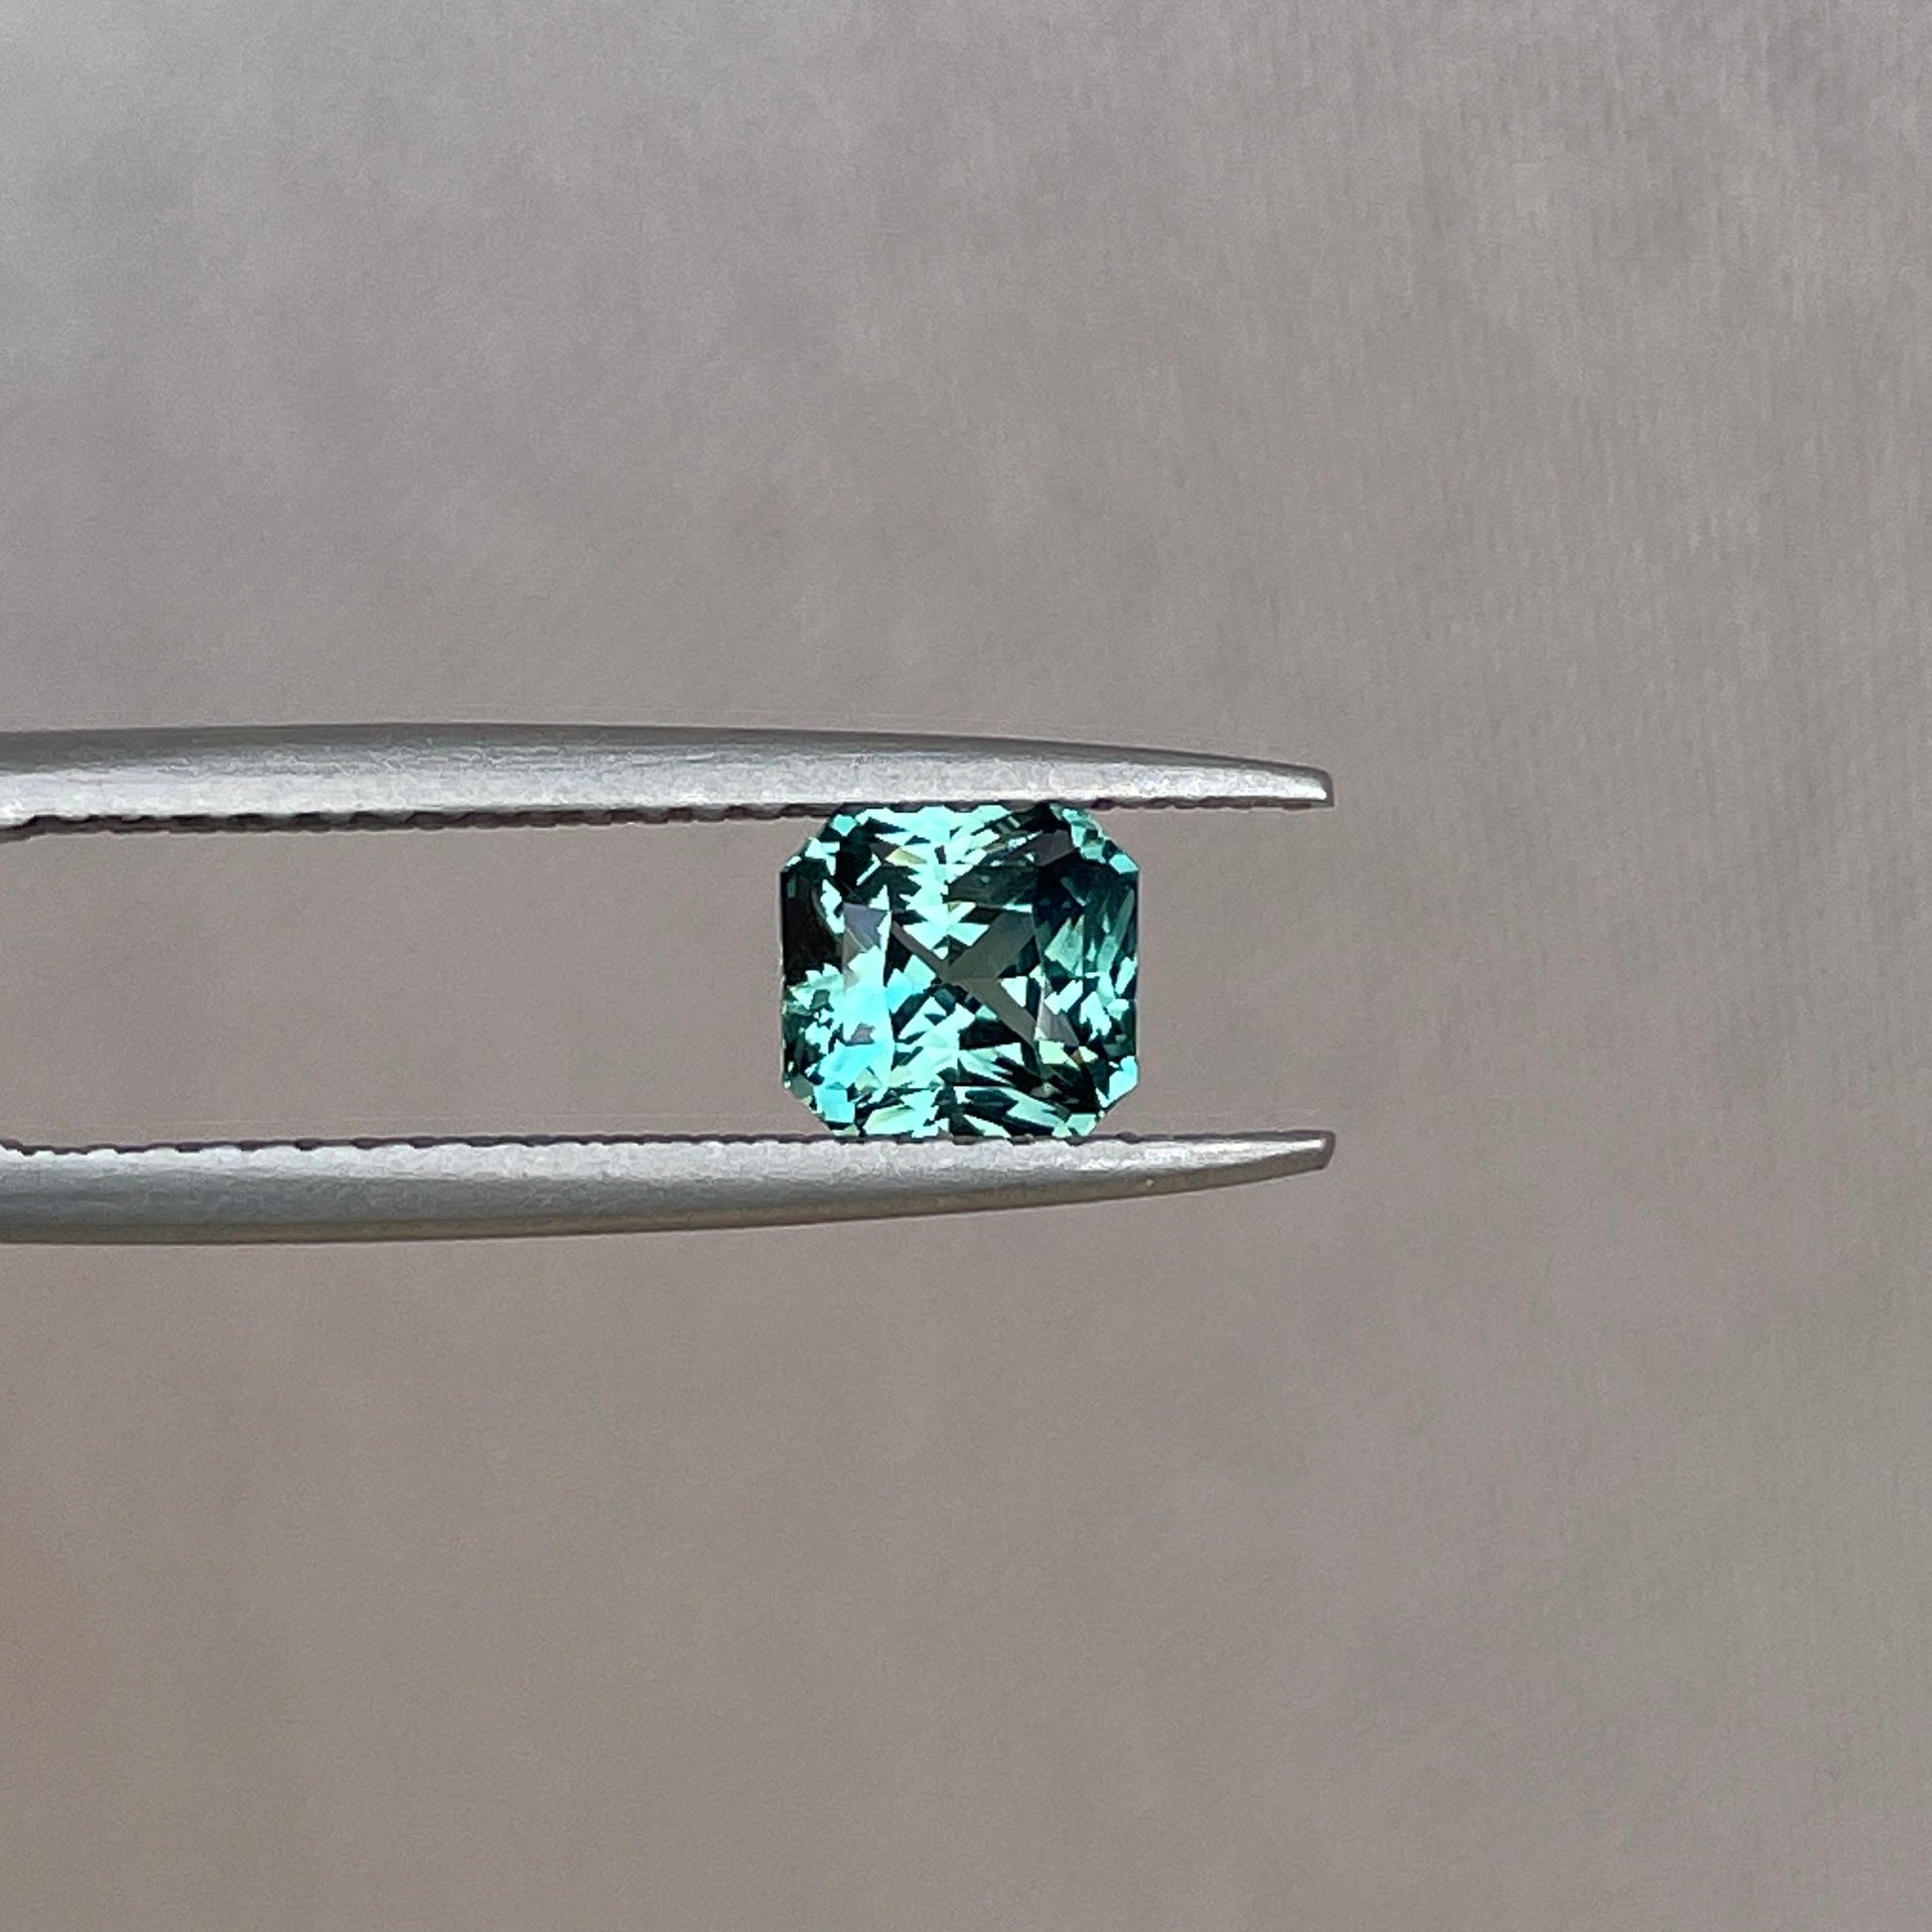 Greenish blue sapphire, 1.03 crt.